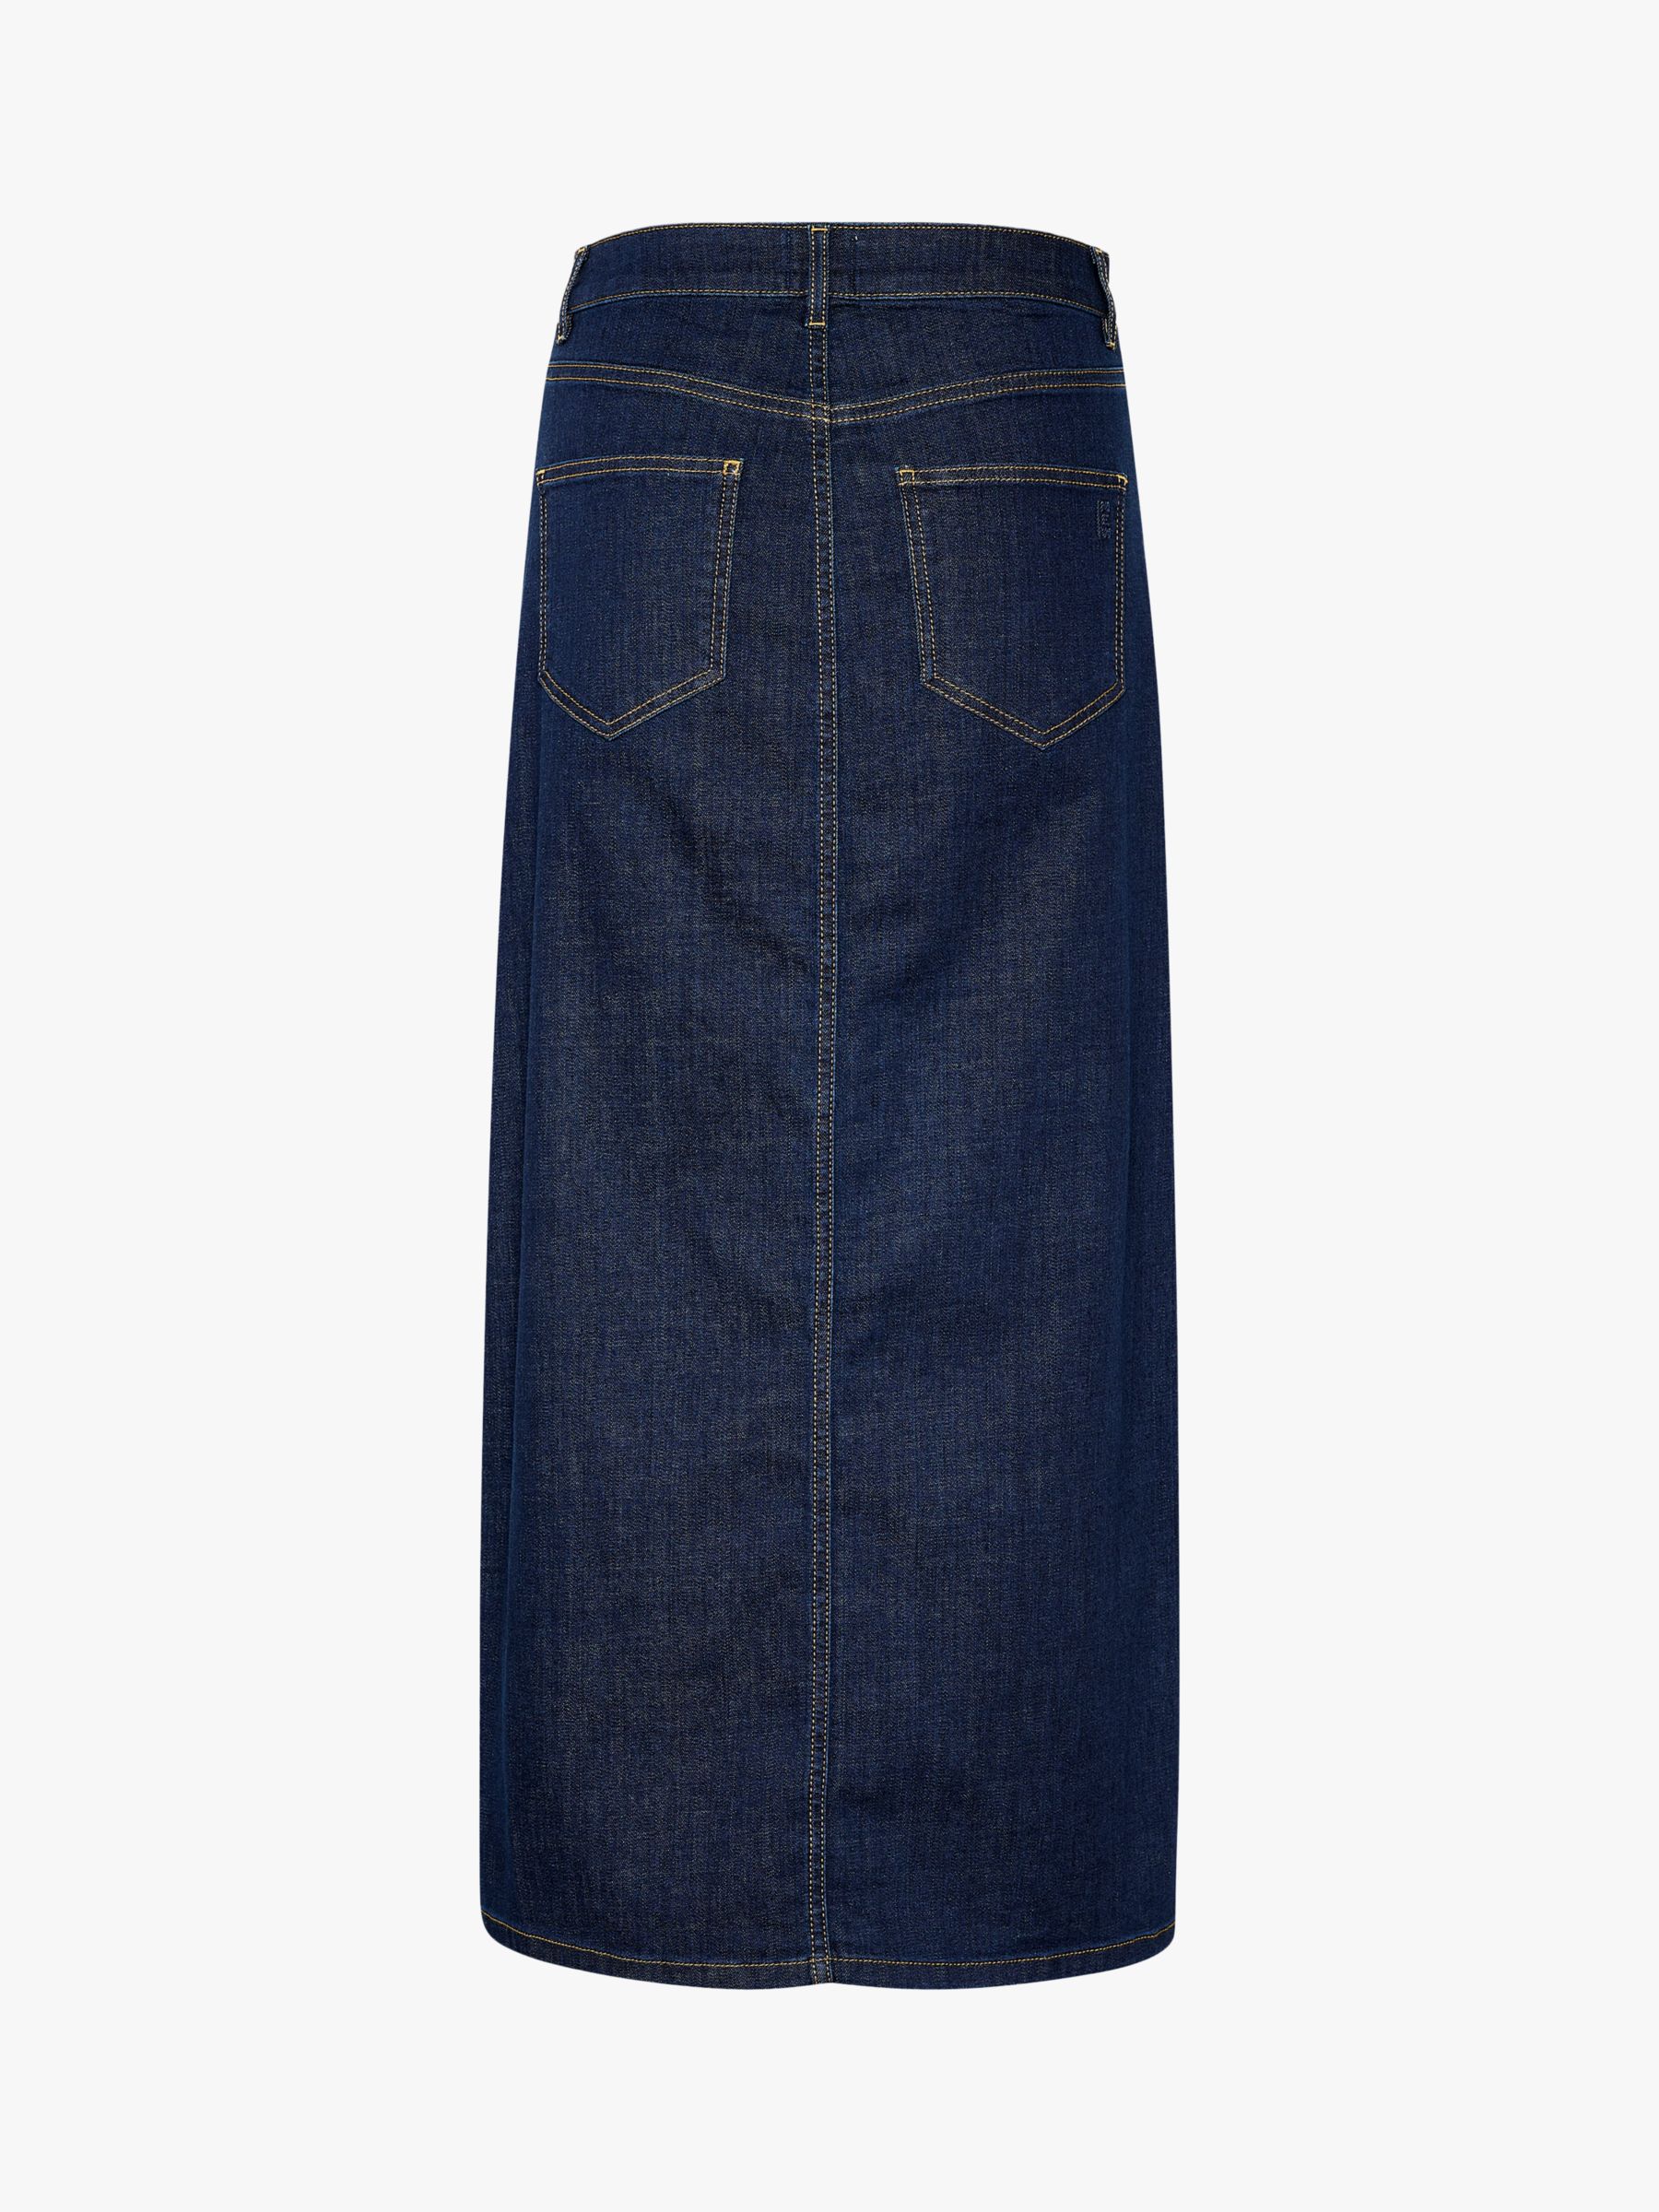 Buy MY ESSENTIAL WARDROBE Dekota Denim High-Waisted Maxi Skirt, Dark Blue Online at johnlewis.com